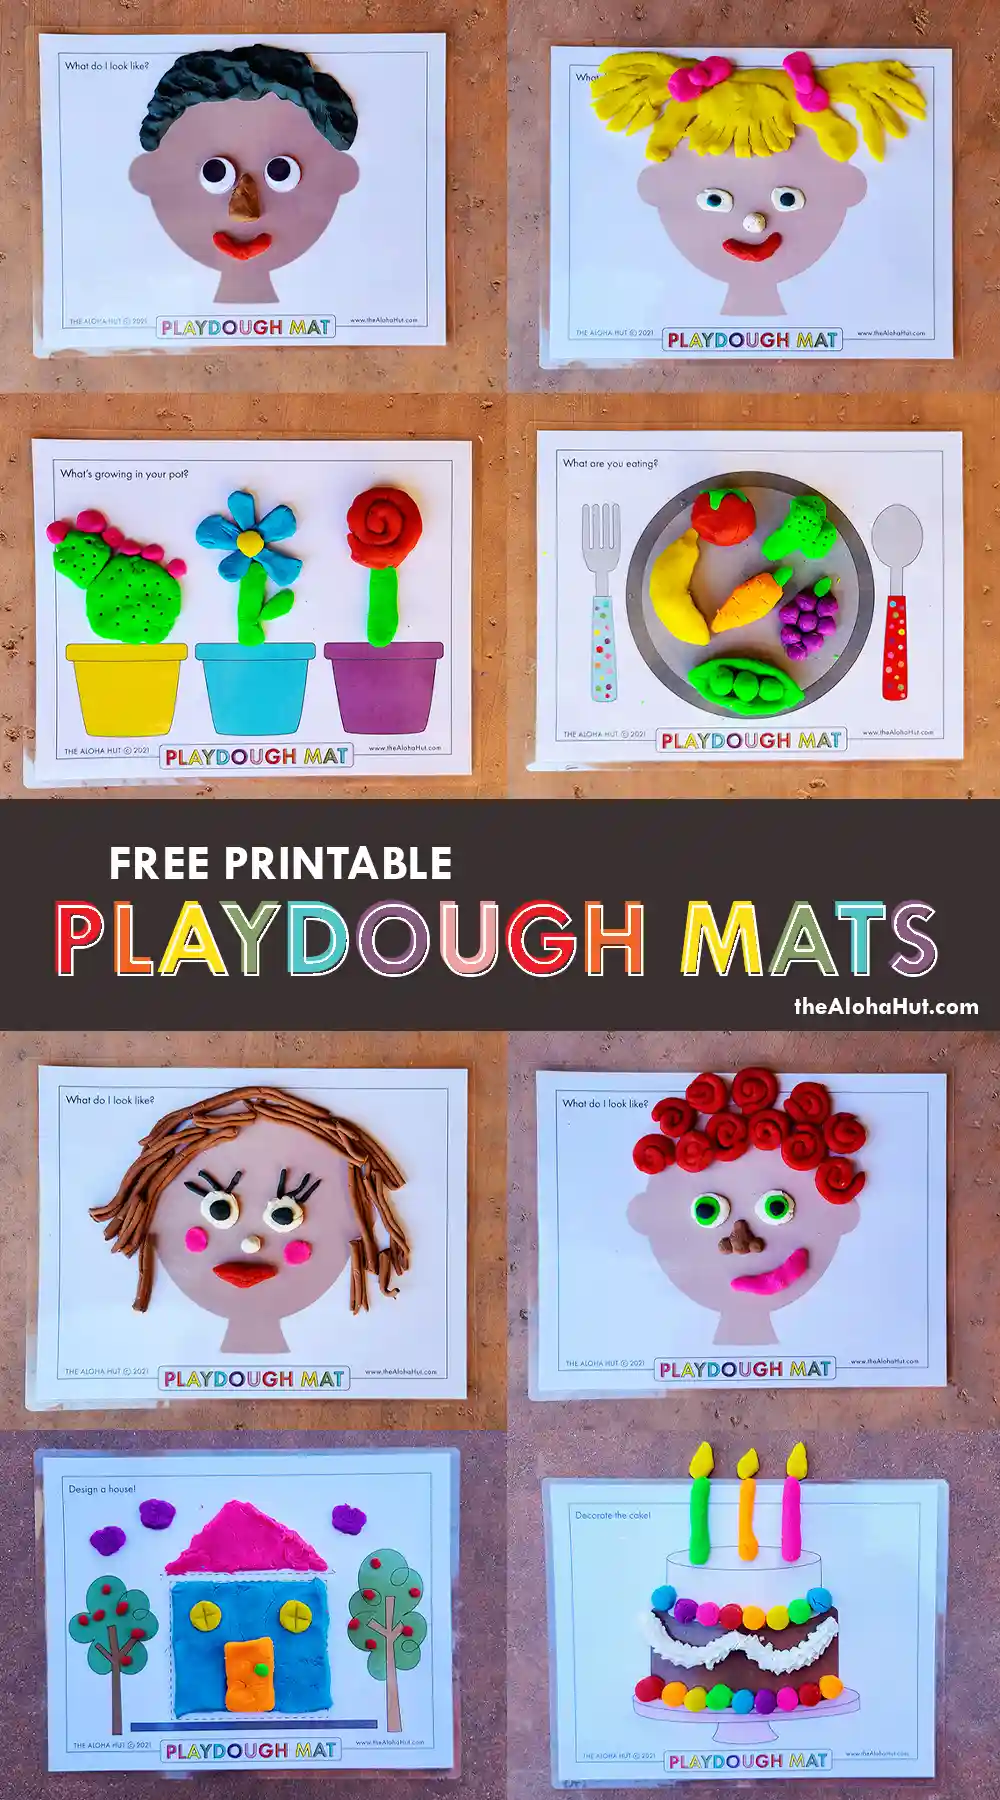 Playdough Mats for Play Dough Activities / Bundle Playdough Scenes /  Creative Playdoh Art for Kids / Blank Face / Nature Scene 